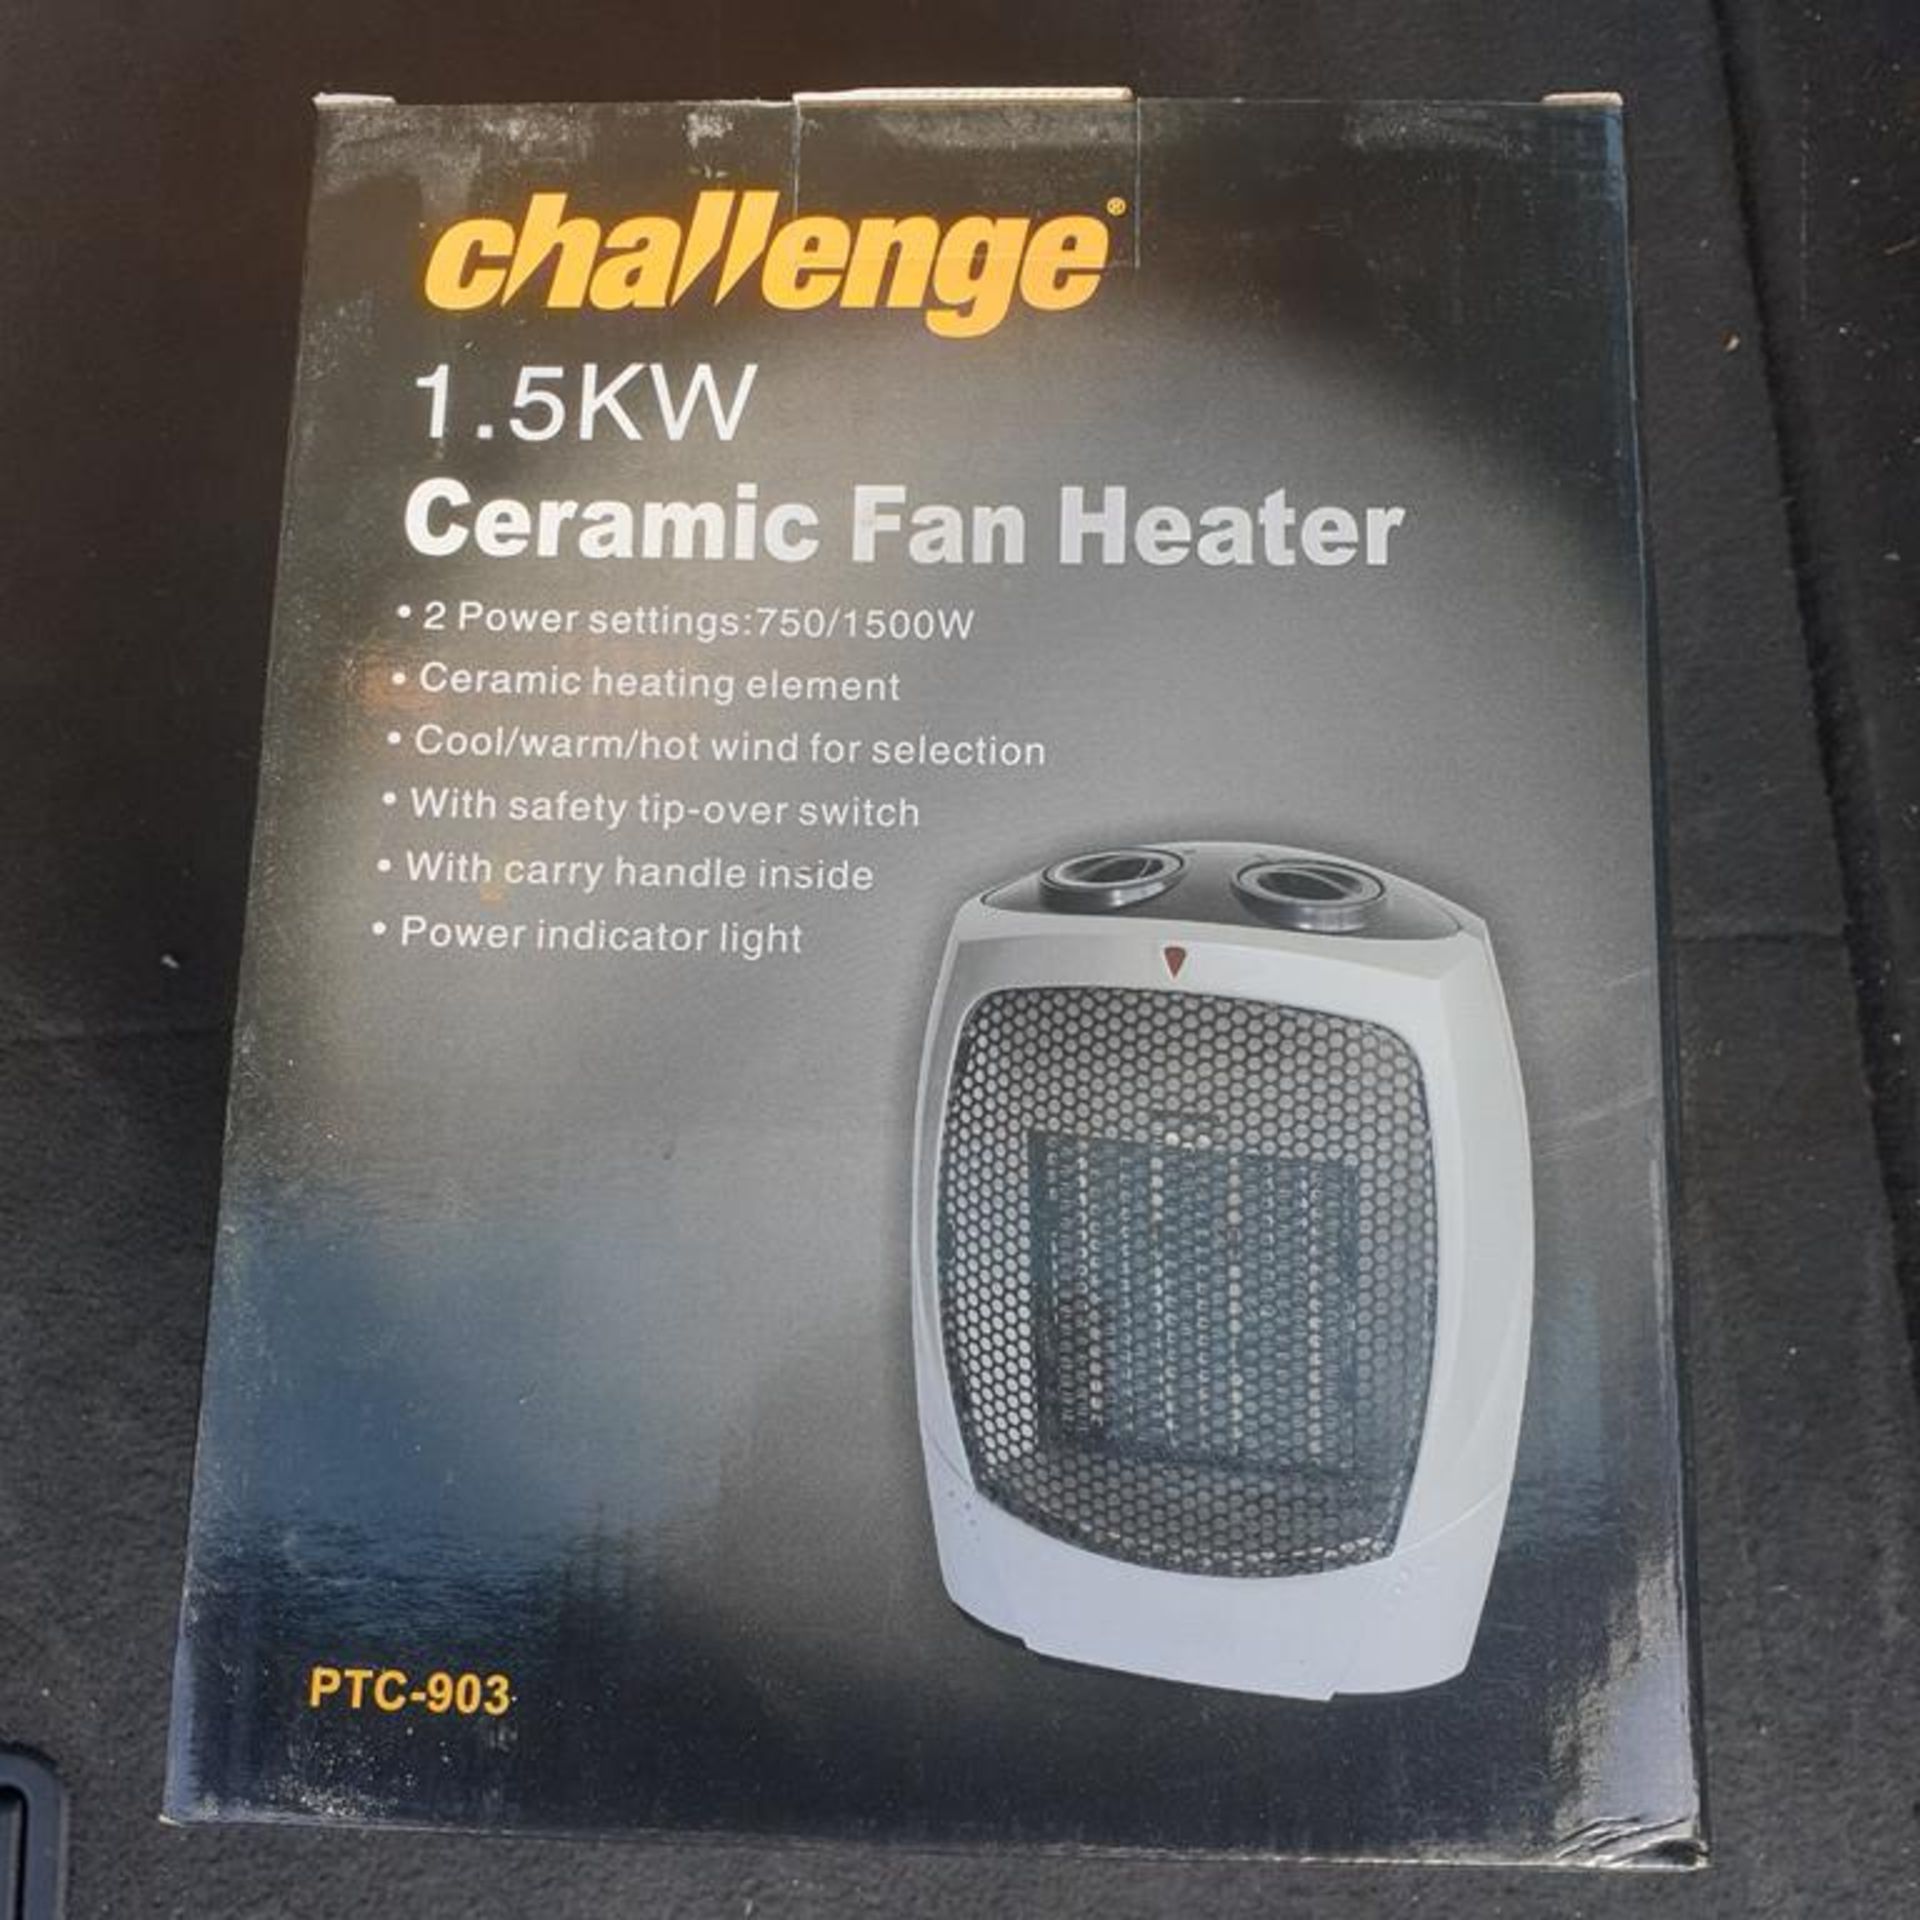 x4 Ceramic Fan Heaters 1.5KW. Brand New